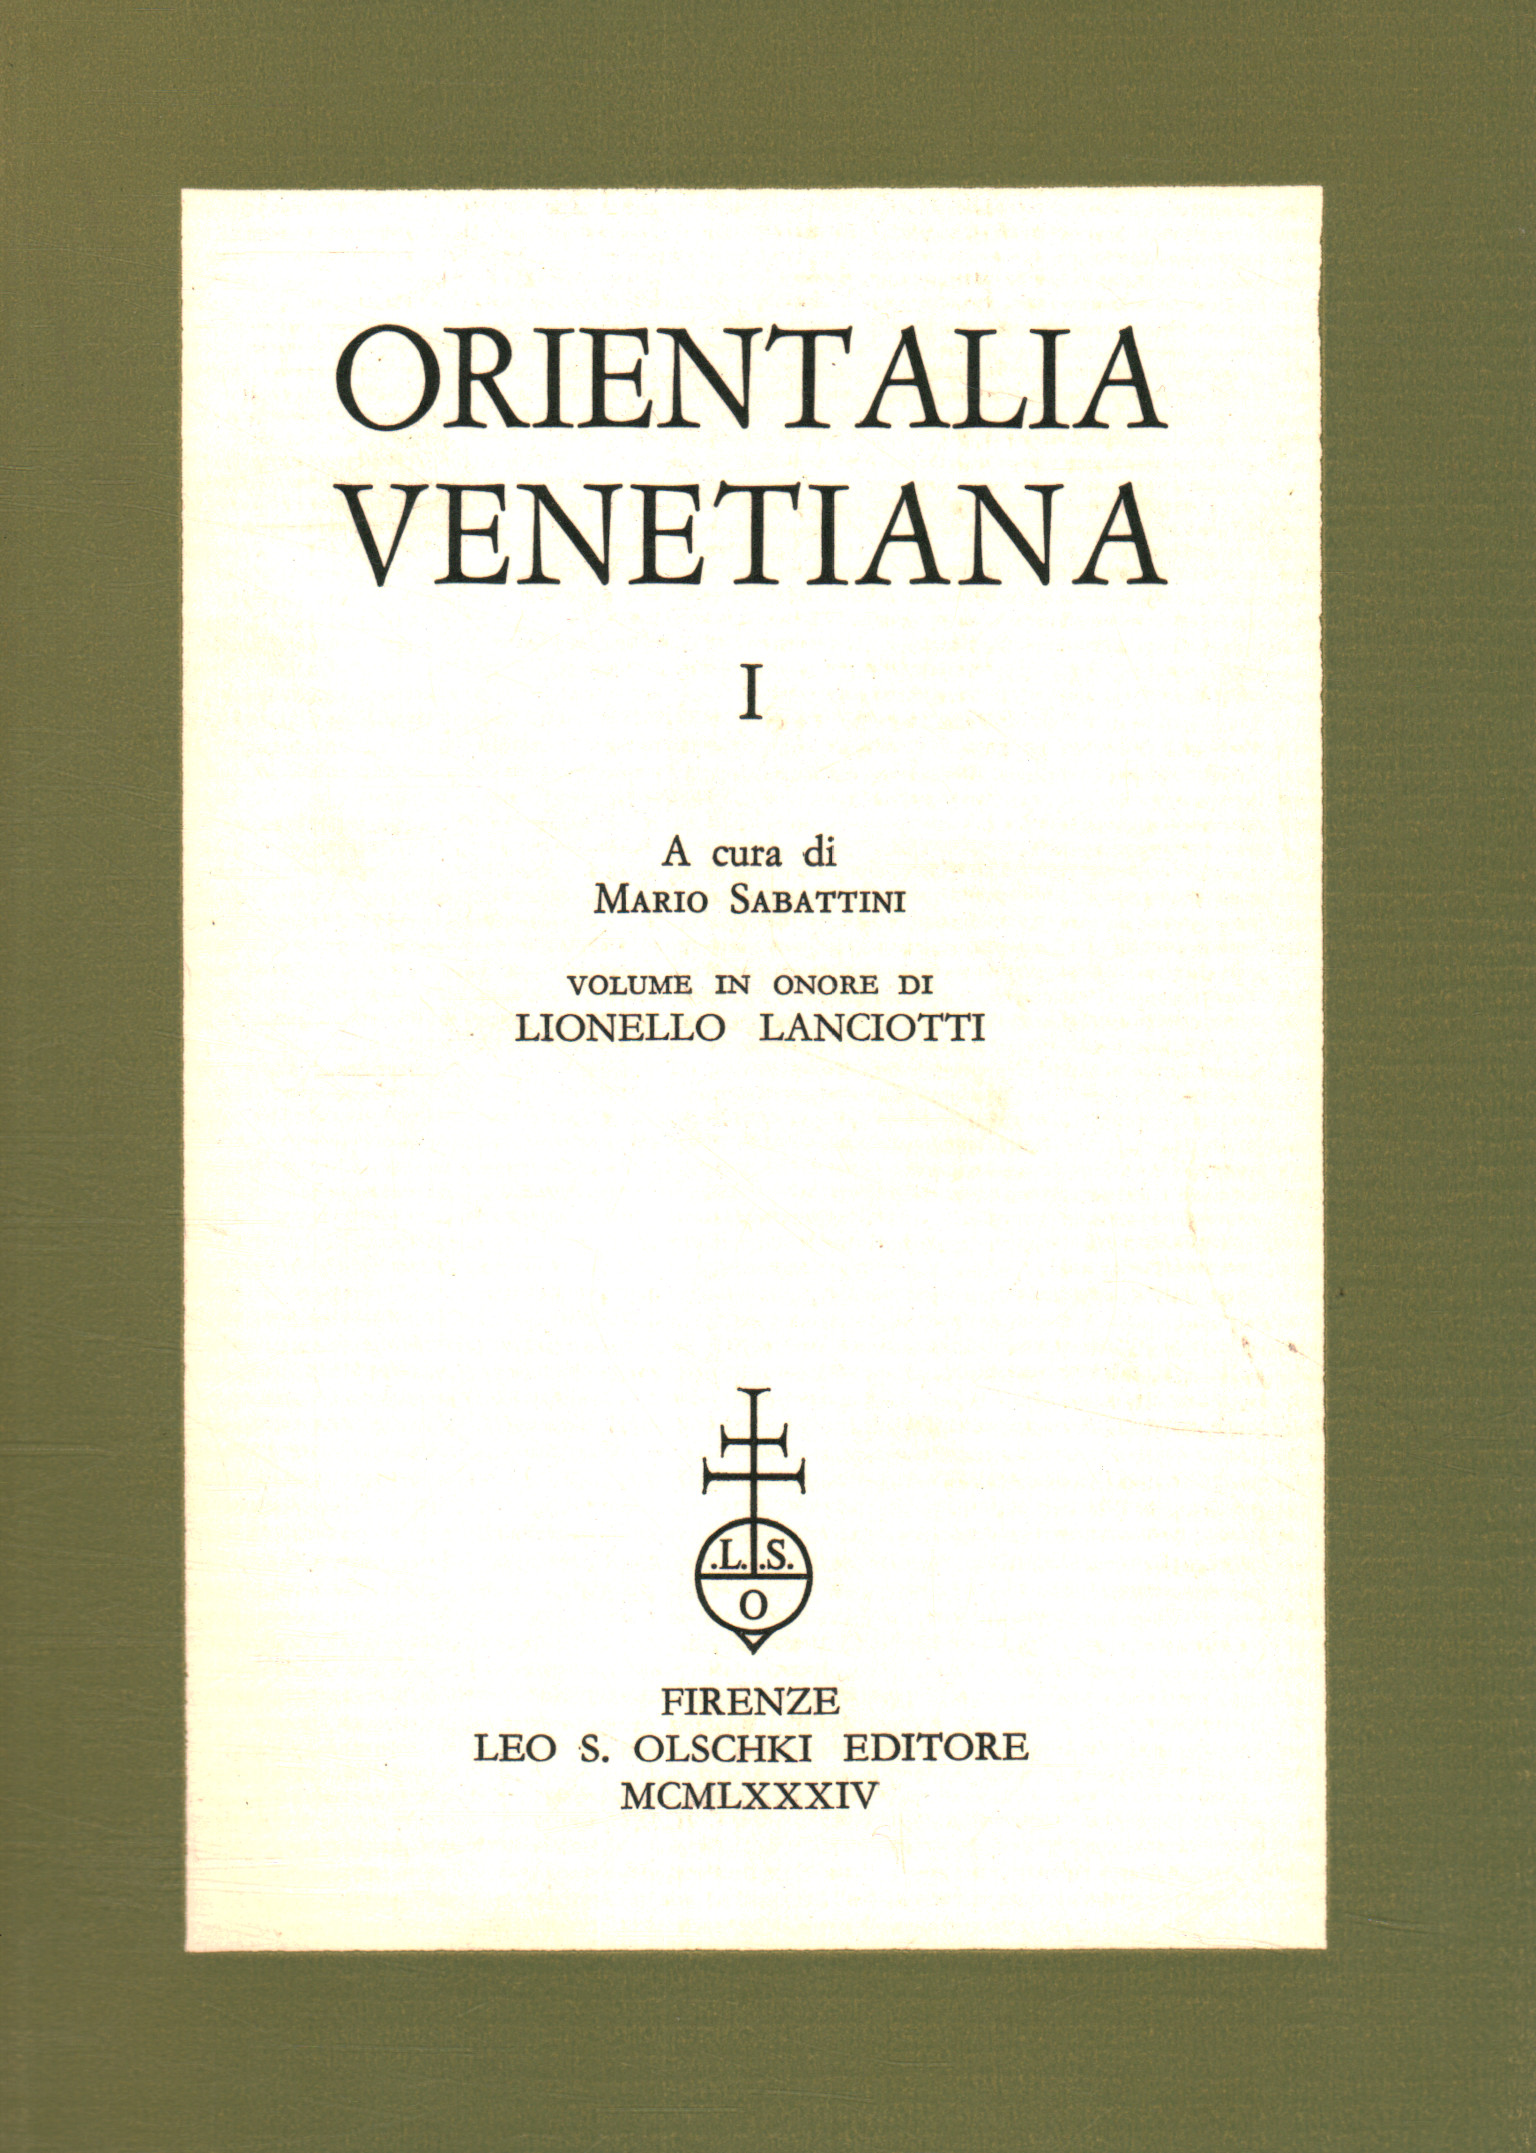 Orientalia venetiana (Volume I)